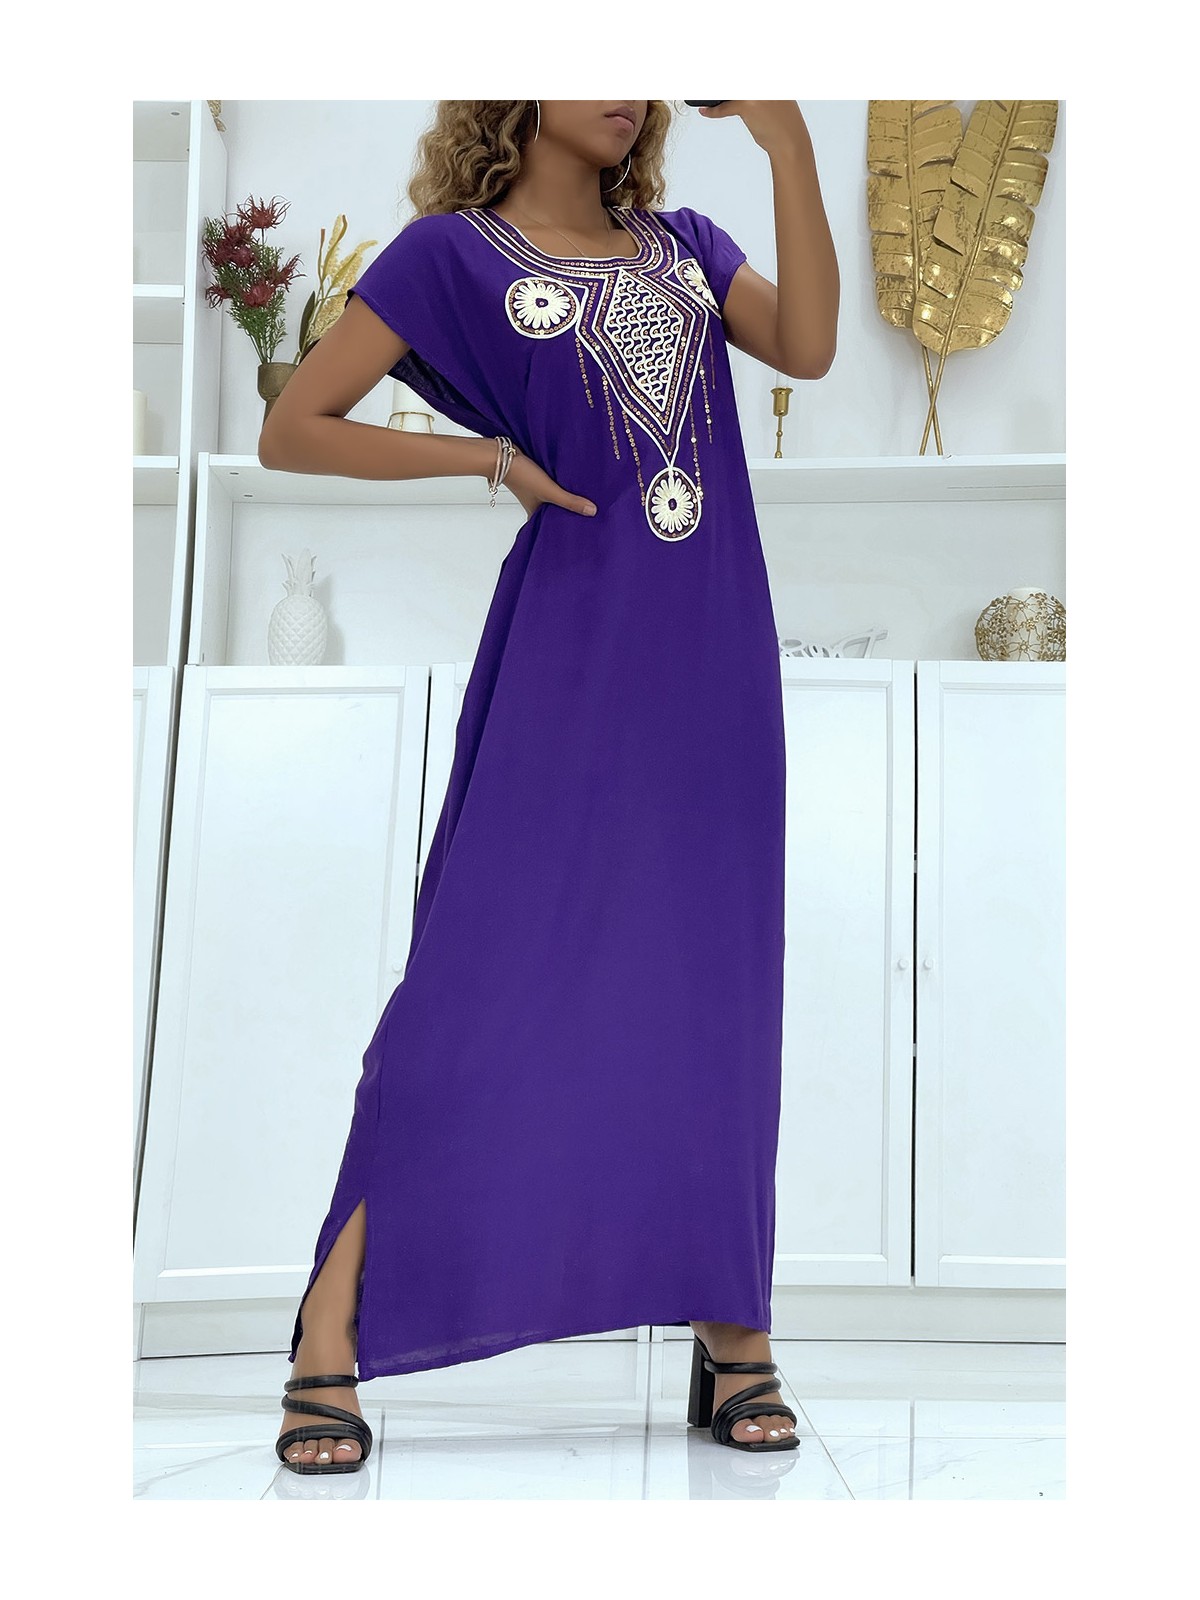 Robe djellaba violet très agréable à porter avec joli motif brodé au col ornée de strass - 4